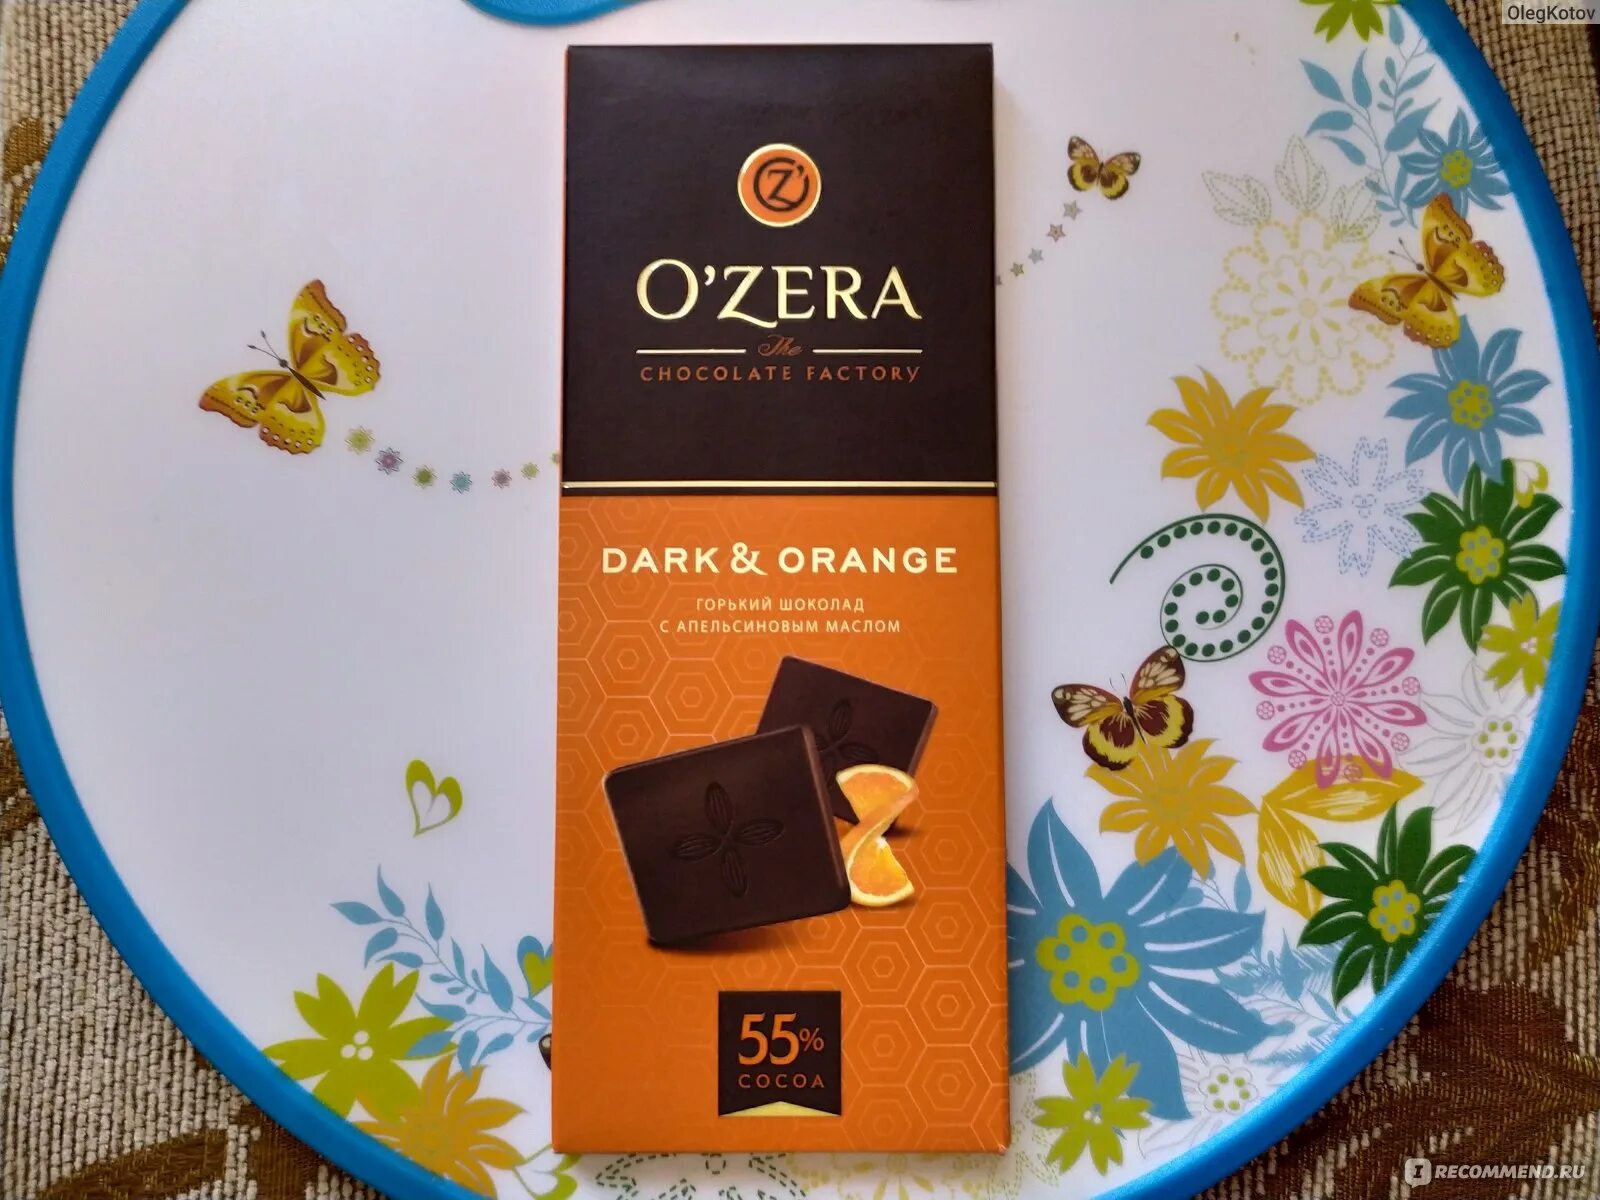 Шоколад флор. Ozera шоколад Горький Orange. Ozera, шоколад Горький Dark. O'Zera Горький шоколад с апельсином. «Ozera», шоколад Горький с апельсиновым маслом Dark&Orange, 90 г.